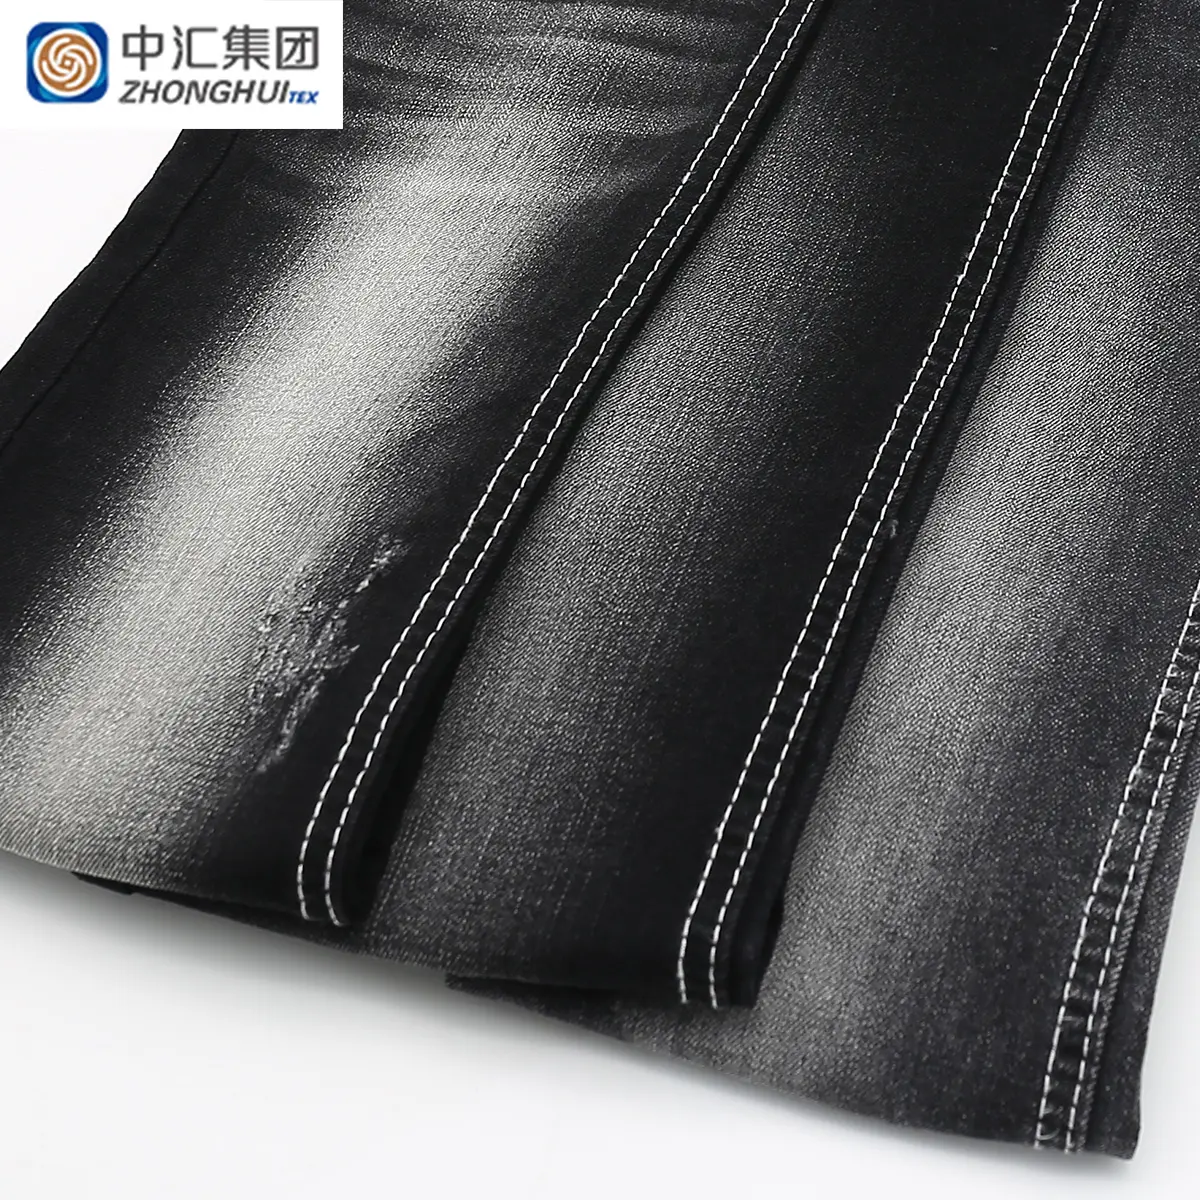 Wholesale Black cotton Polyester Spandex Blend Woven Twill Denim Jean Fabric for Vietnam